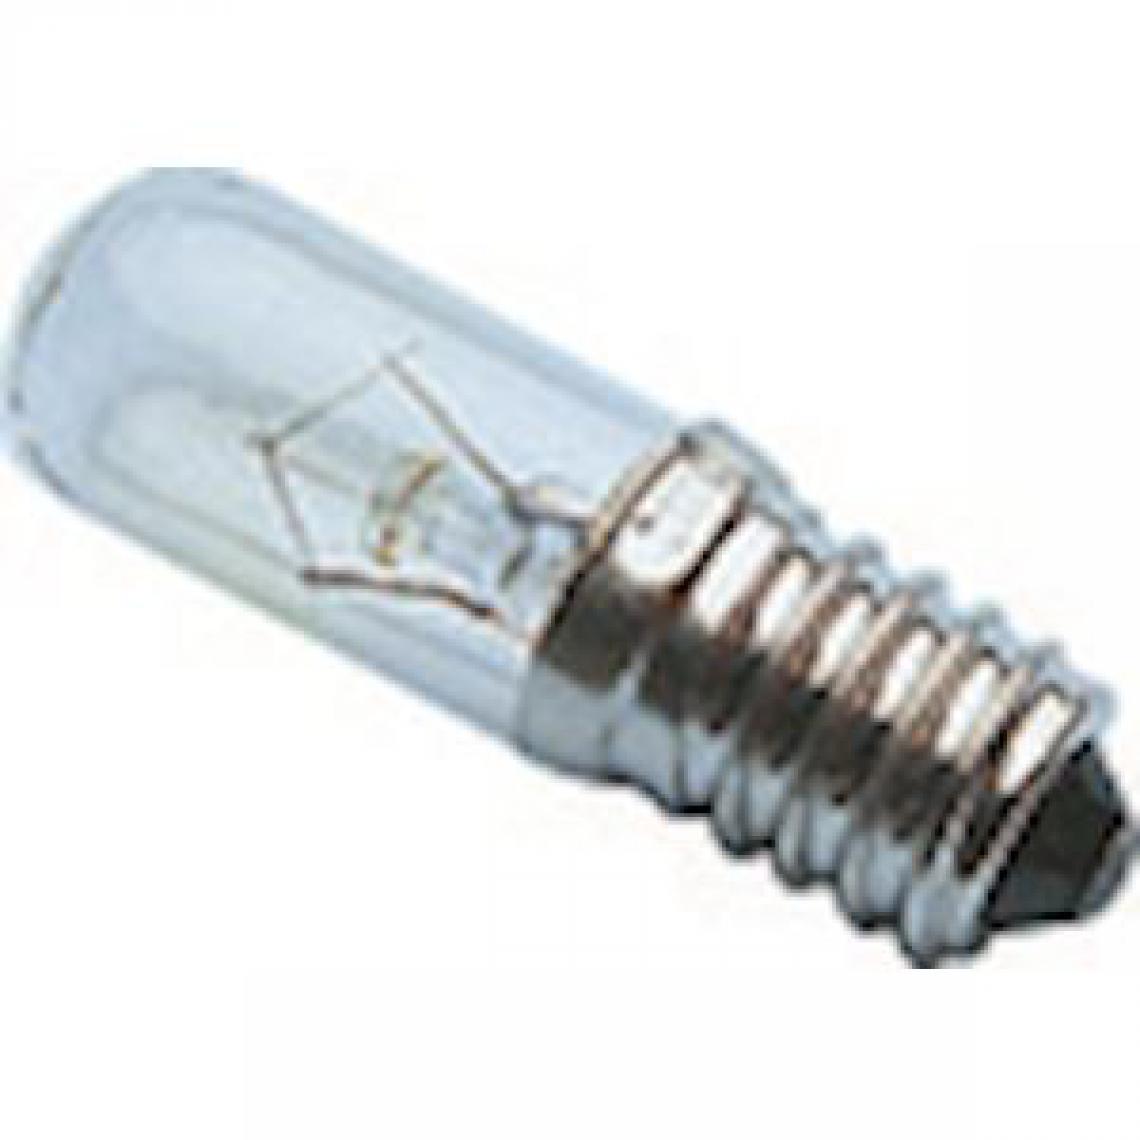 Orbitec - lampe miniature - e14 - 16 x 54 - 24 volts - 15 watts - orbitec 118396 - Ampoules LED